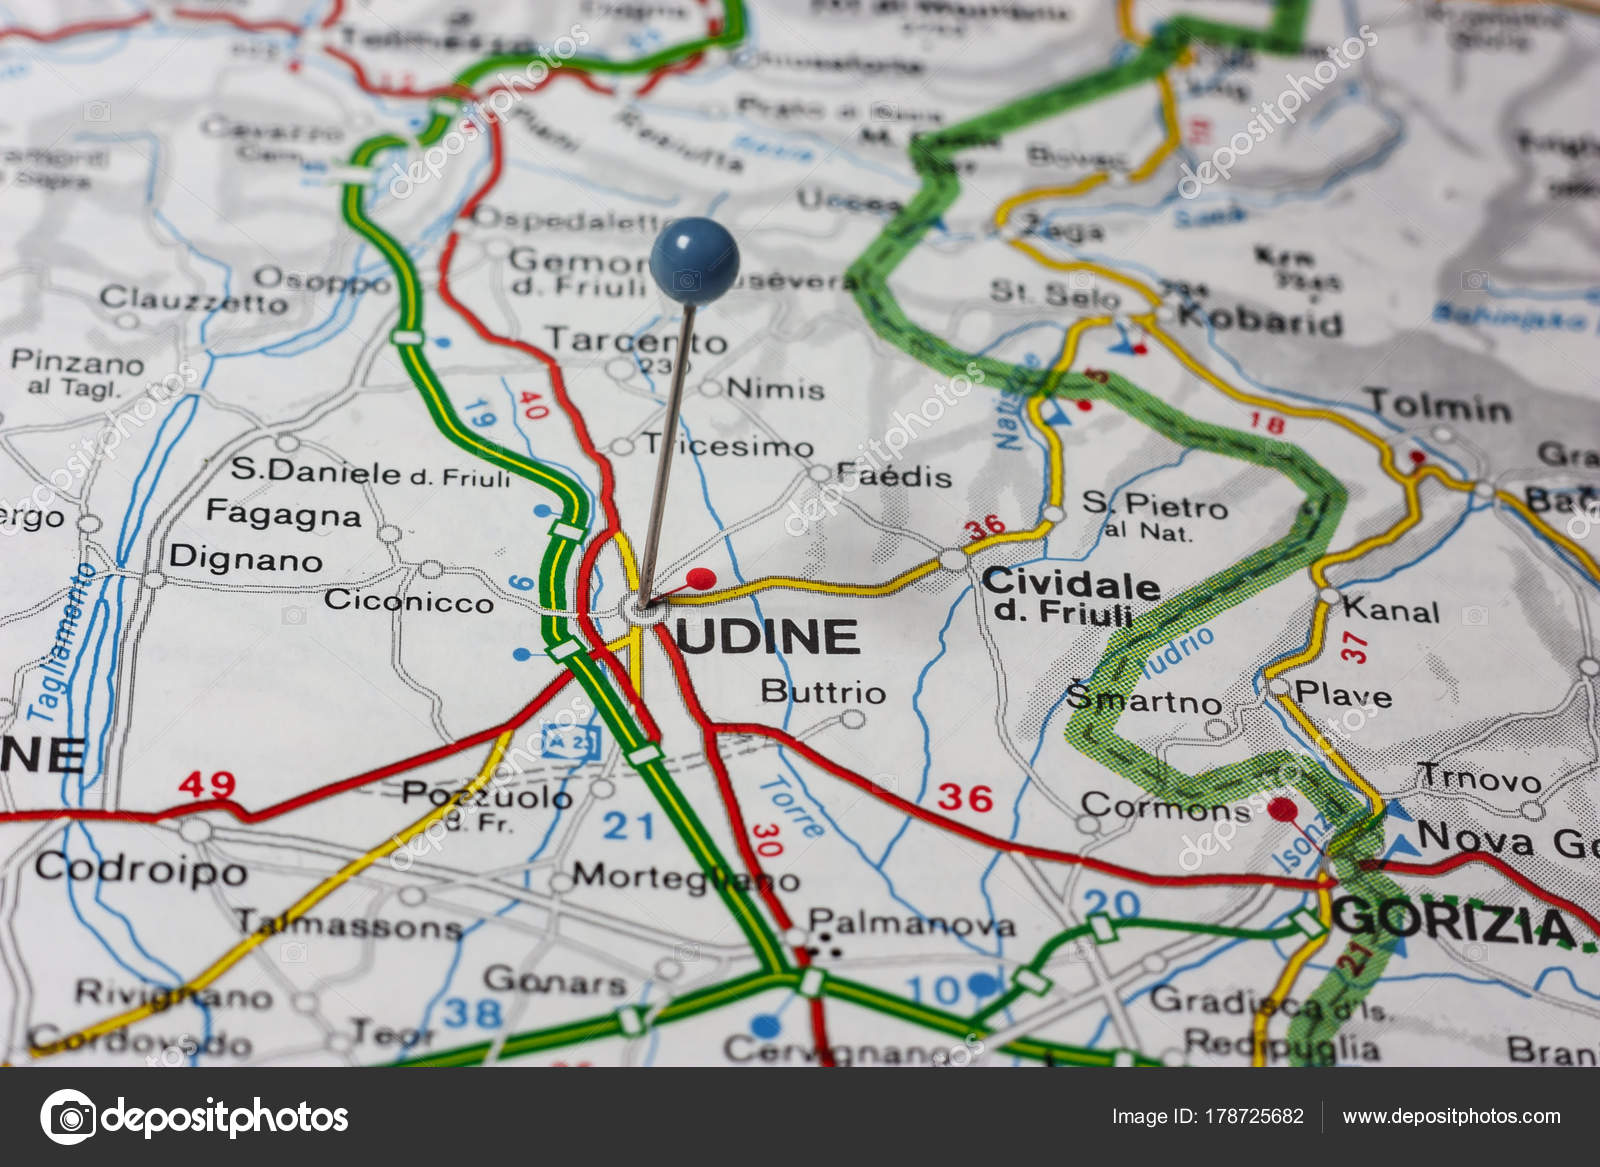 udine karta Udine fästs på en karta över Italien — Stockfotografi © maior  udine karta